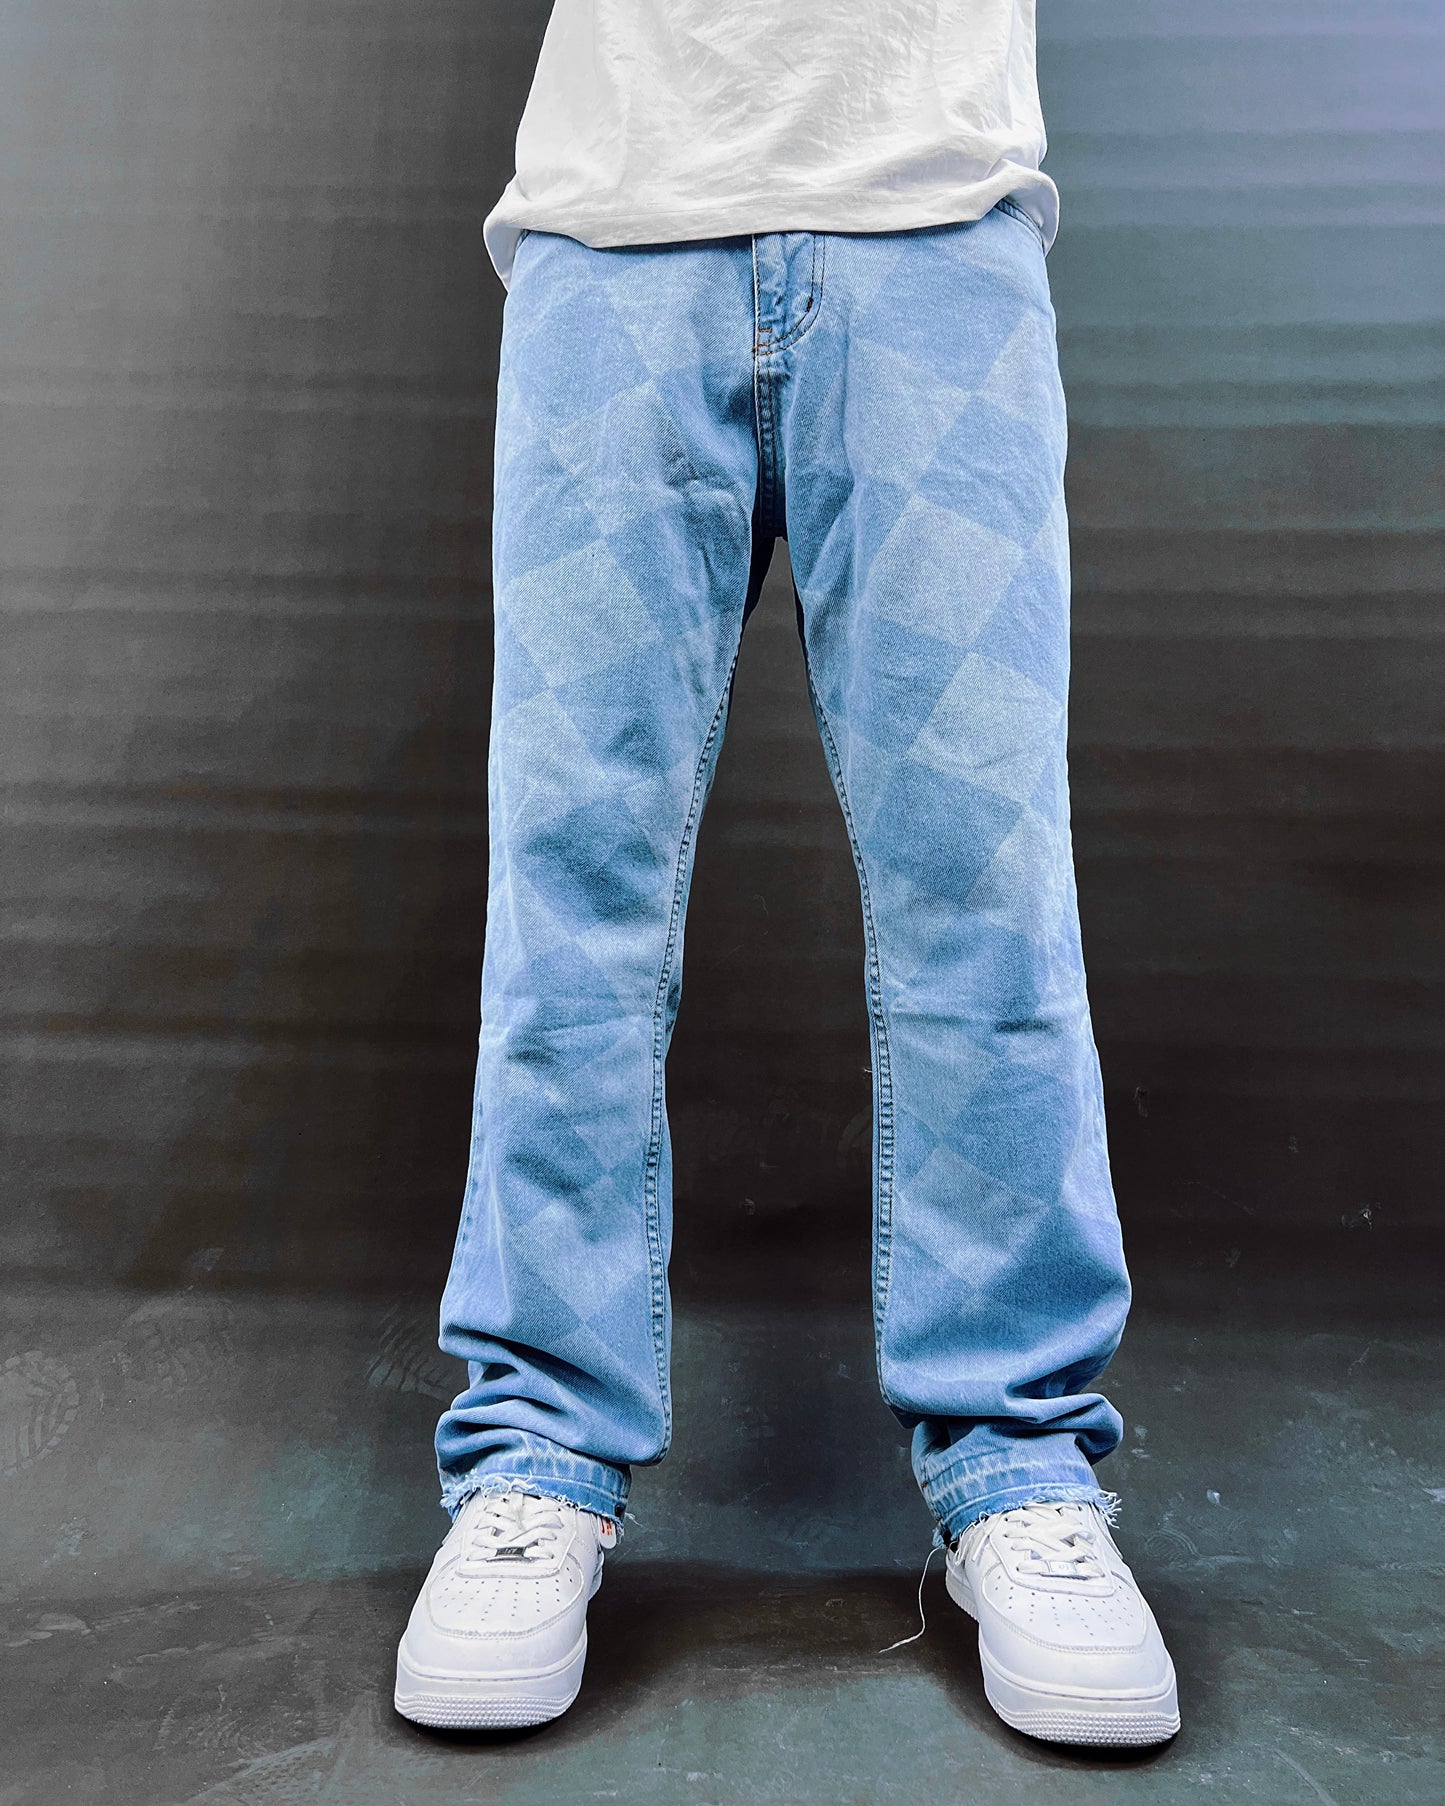 Denim bro checkered jeans in blue